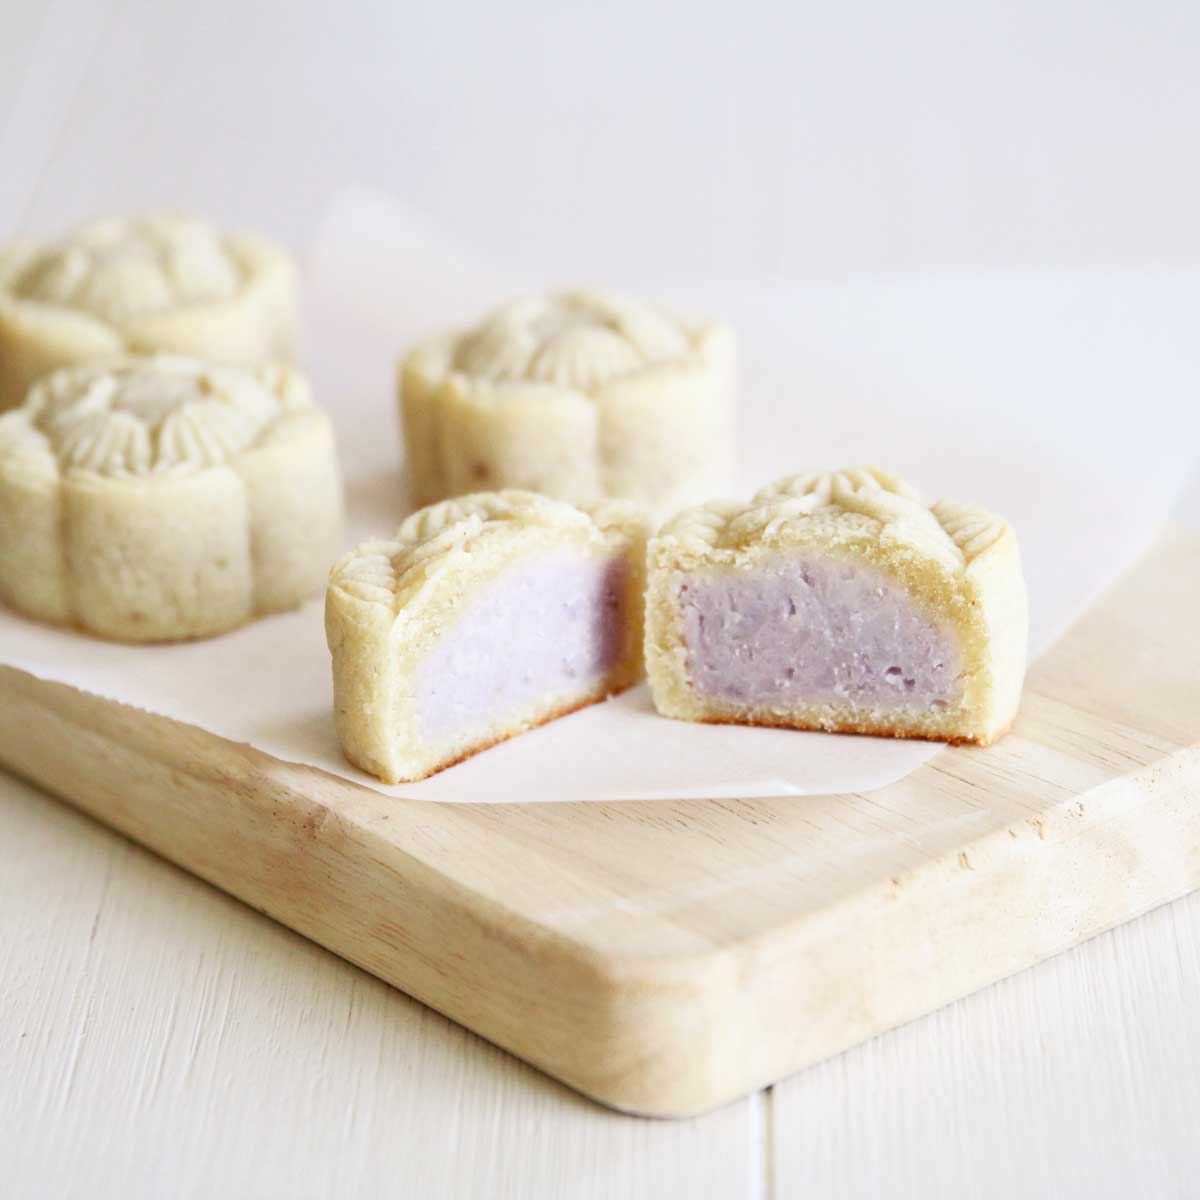 Almond Flour Taro Mooncakes (Vegan & Gluten Free) - Walnut Butter Mooncakes